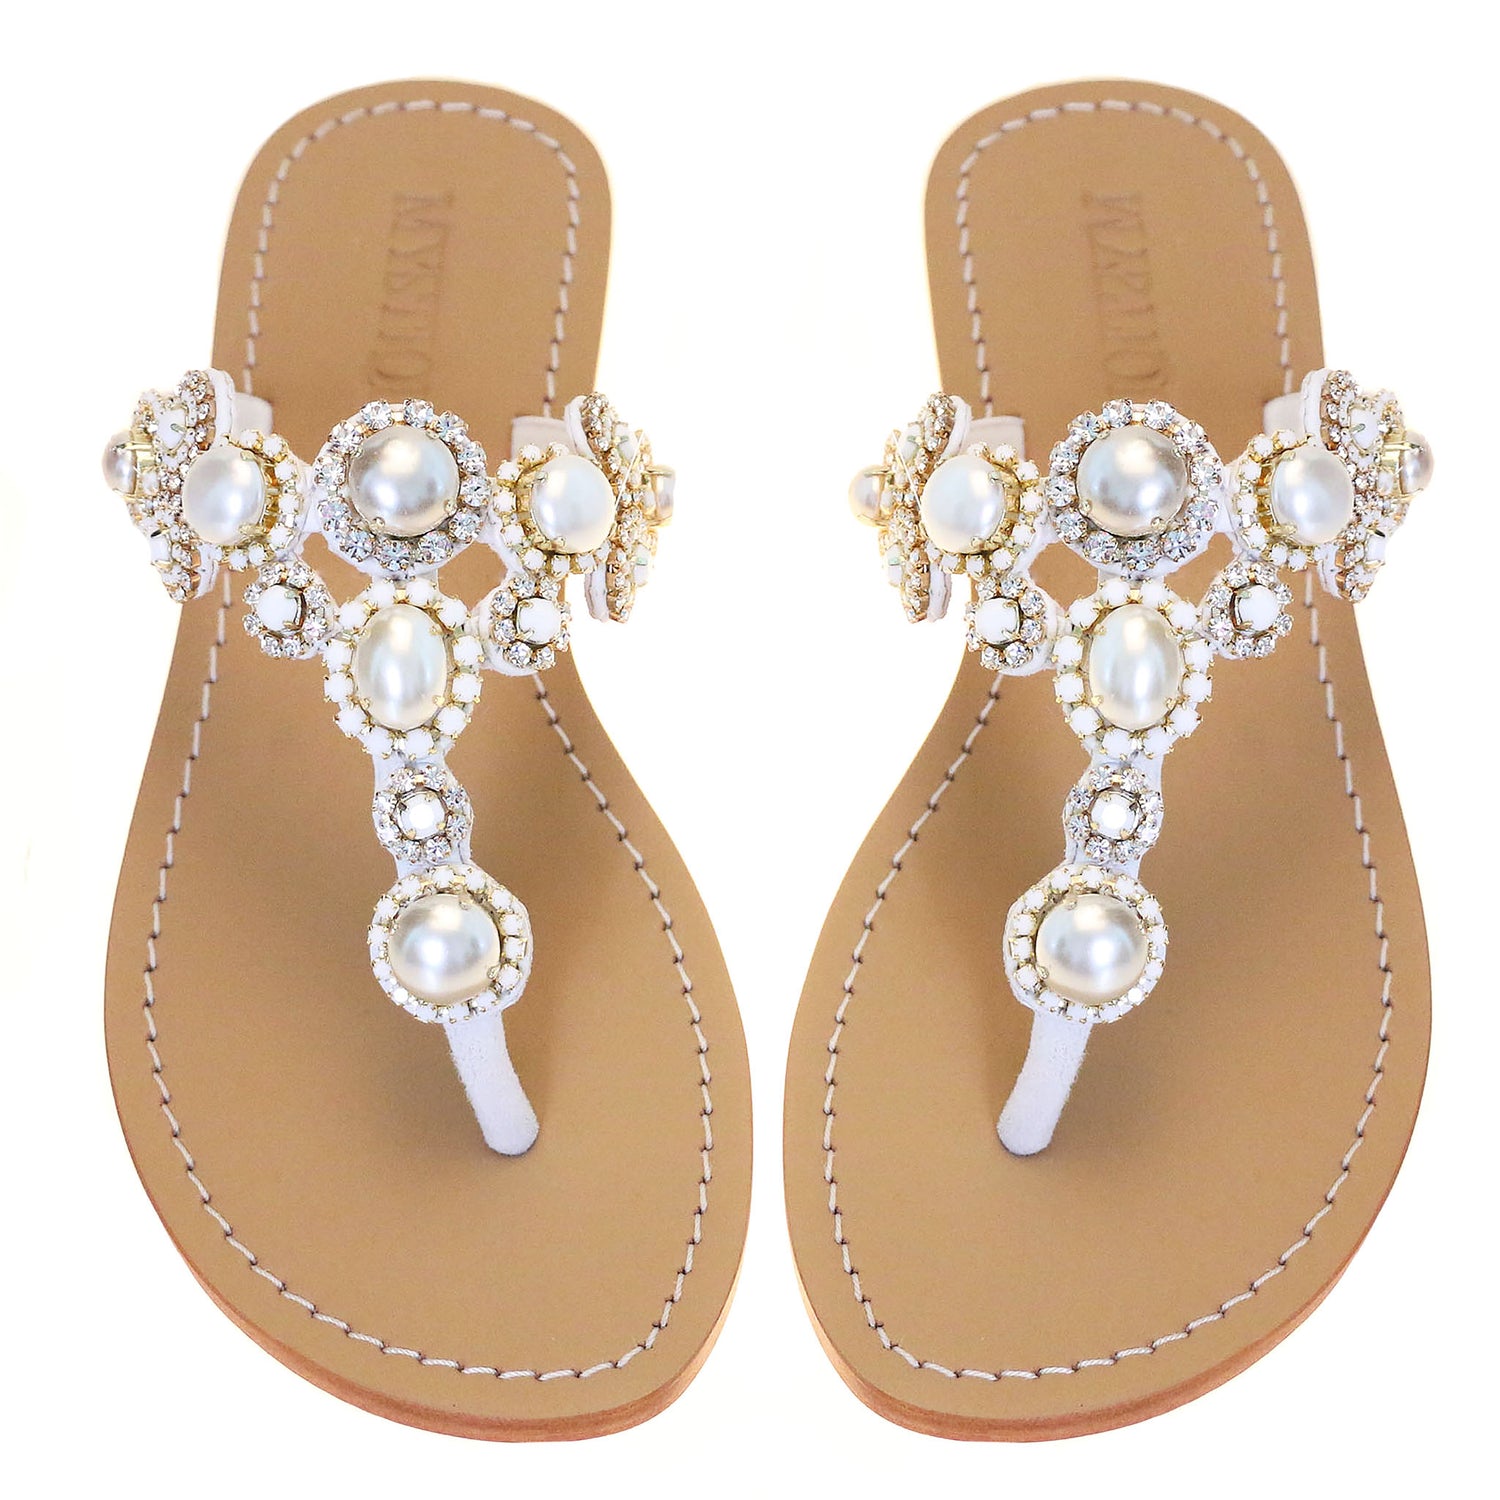 Paris - Women's White Pearl Jeweled Wedding Sandals | Mystique Sandals